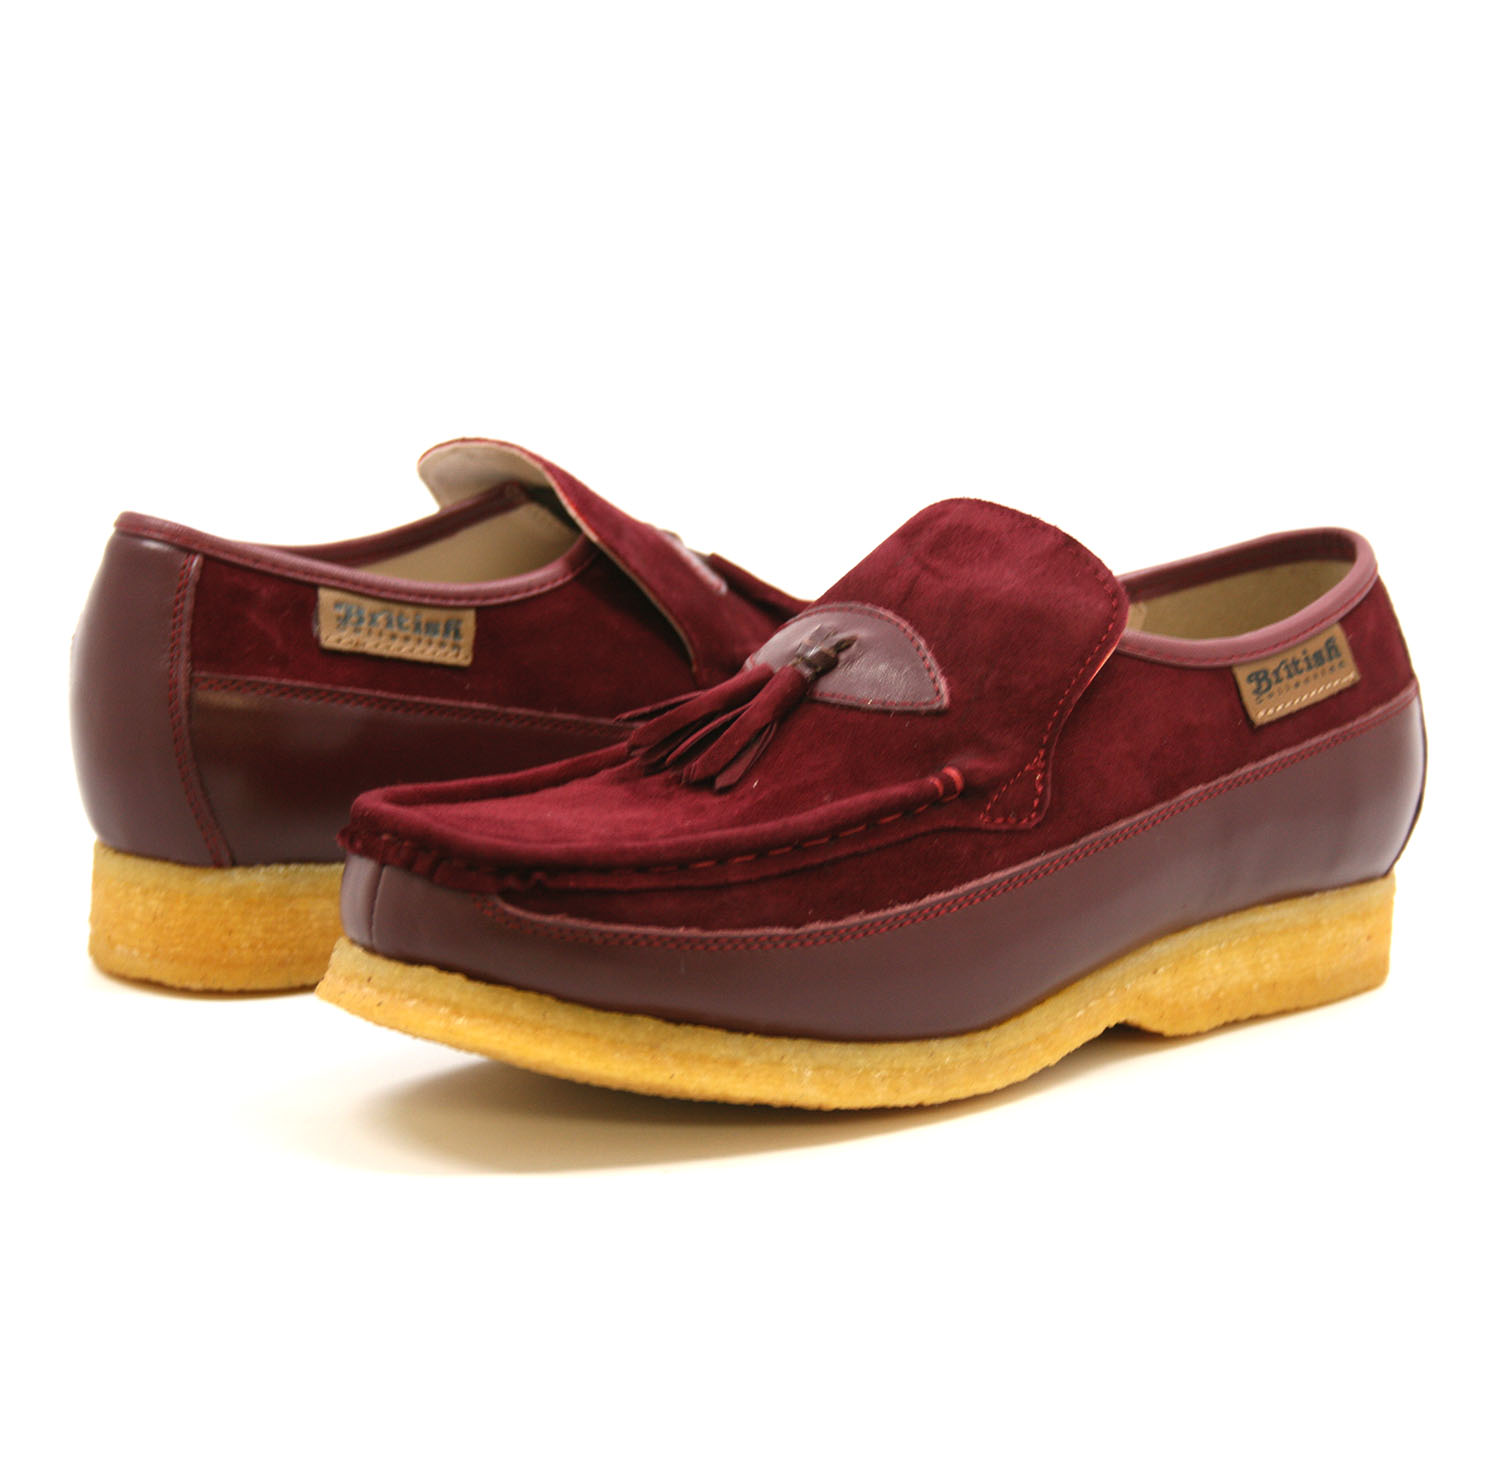 burgundy school shoes